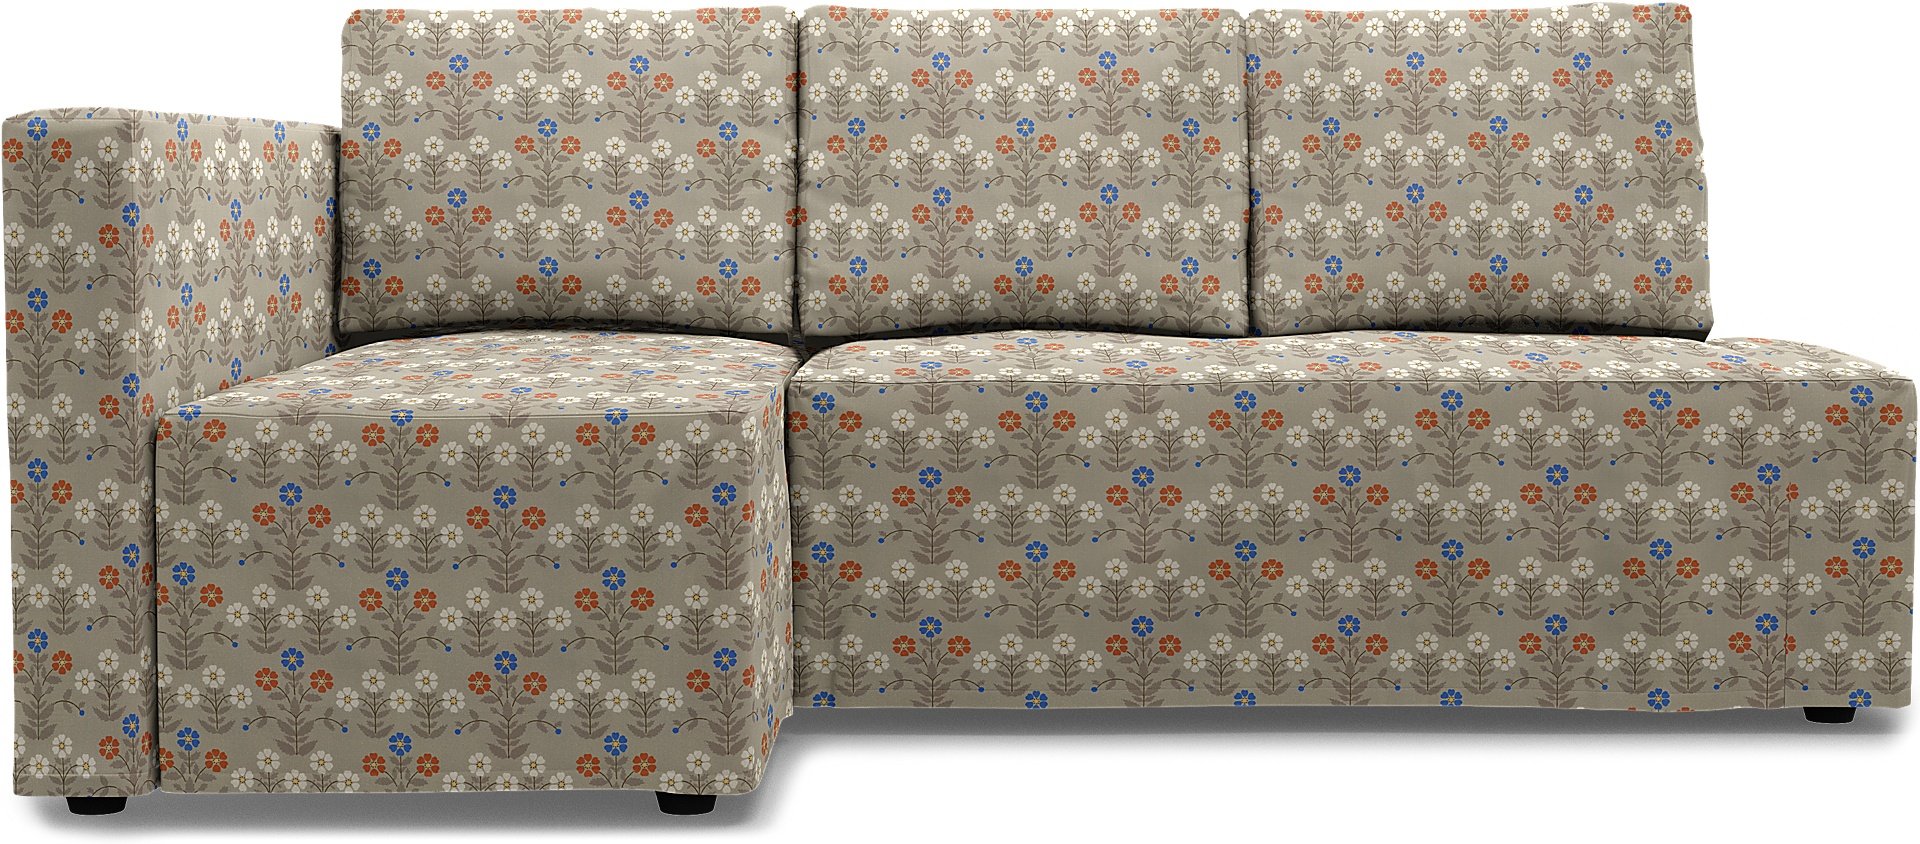 IKEA - Friheten Sofa Bed with Left Chaise Cover, Sippor Blue/Orange, BEMZ x BORASTAPETER COLLECTION 